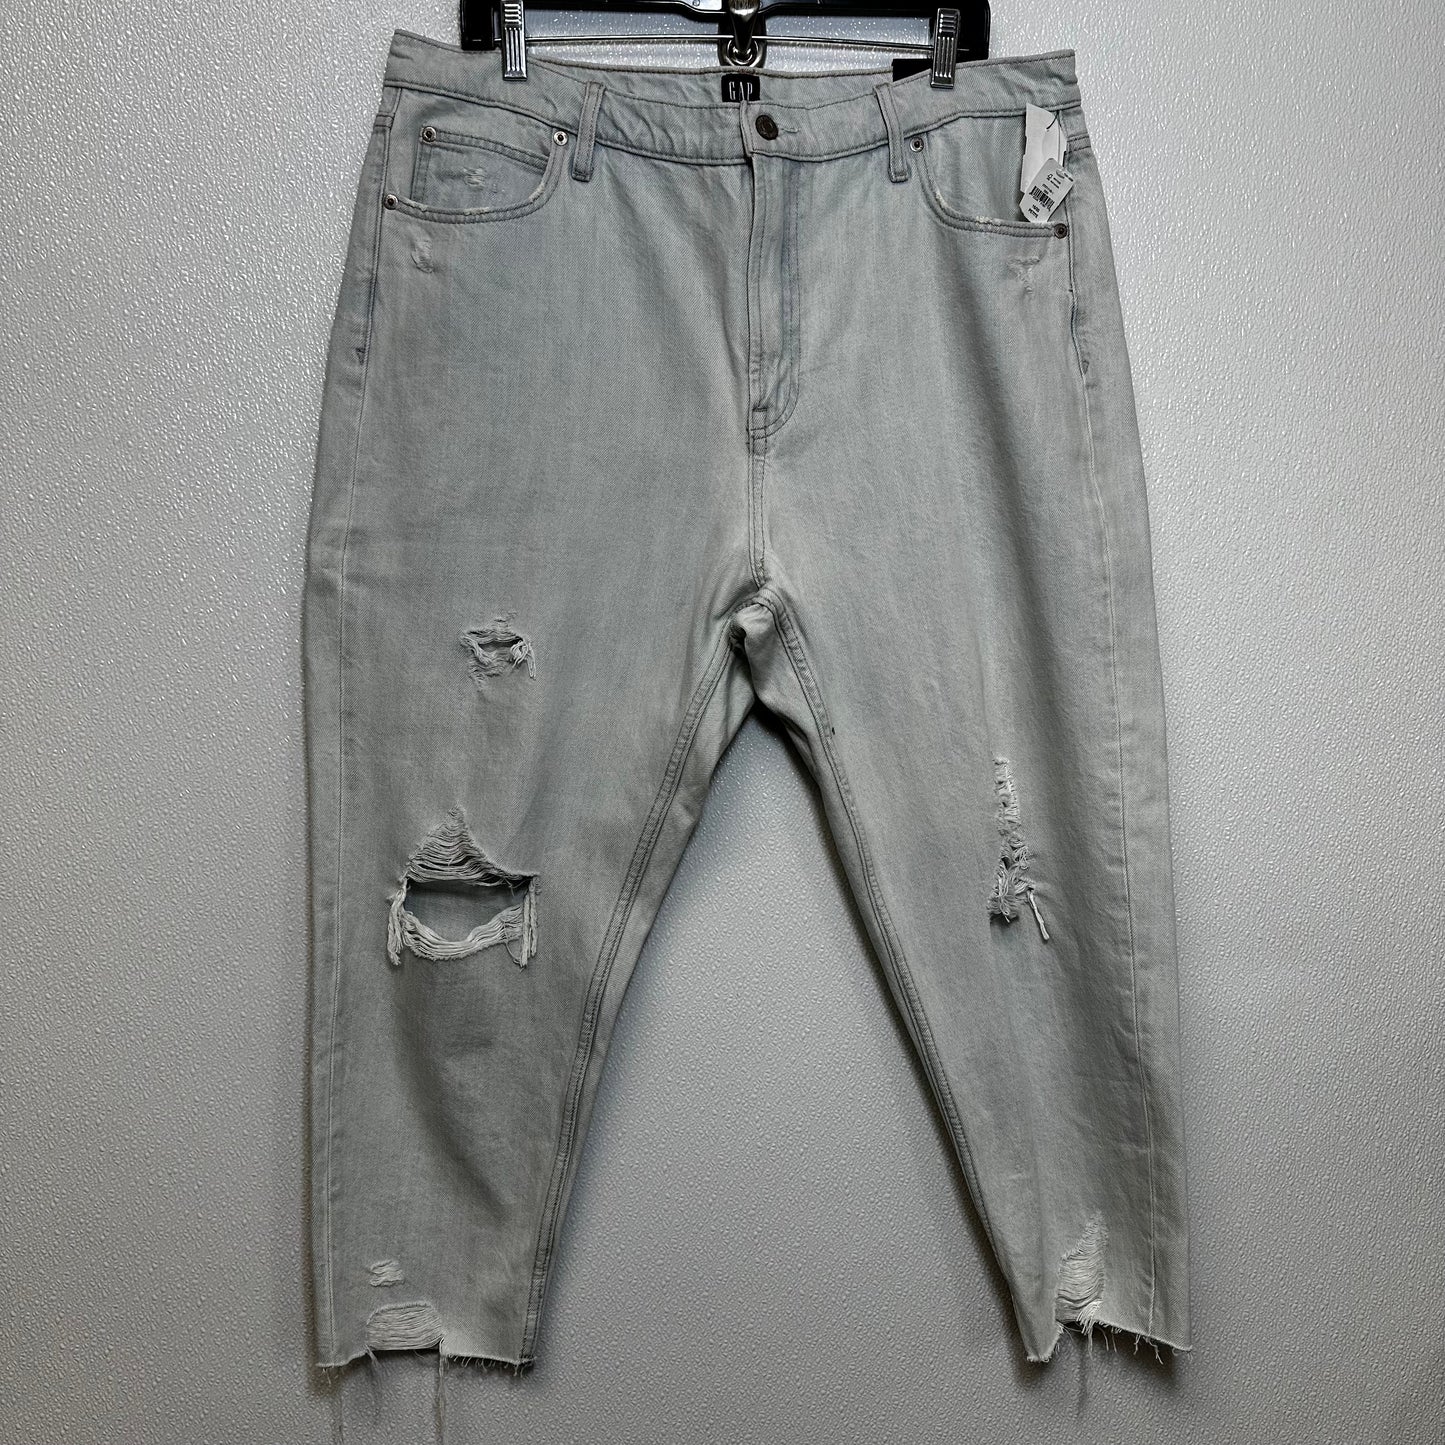 Denim Jeans Relaxed/boyfriend Gap, Size 16